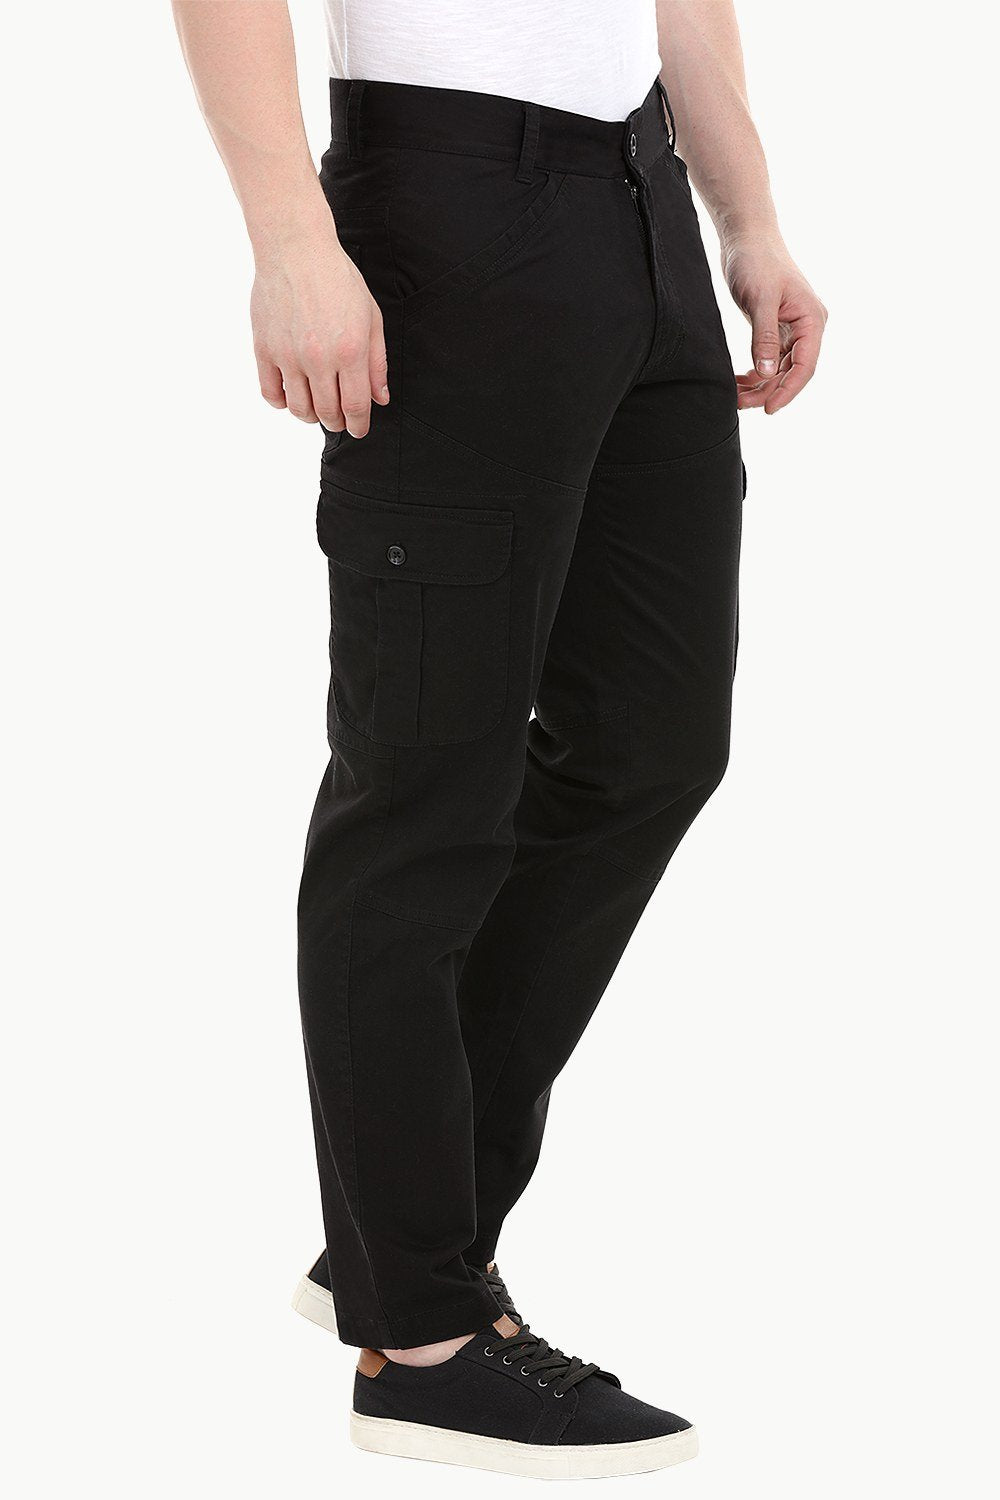 Buy Shop Frenzy Women/Girl Cotton Regular Fit 6 Pocket Cargo Pants Regular  Fit Online at Best Prices in India - JioMart.